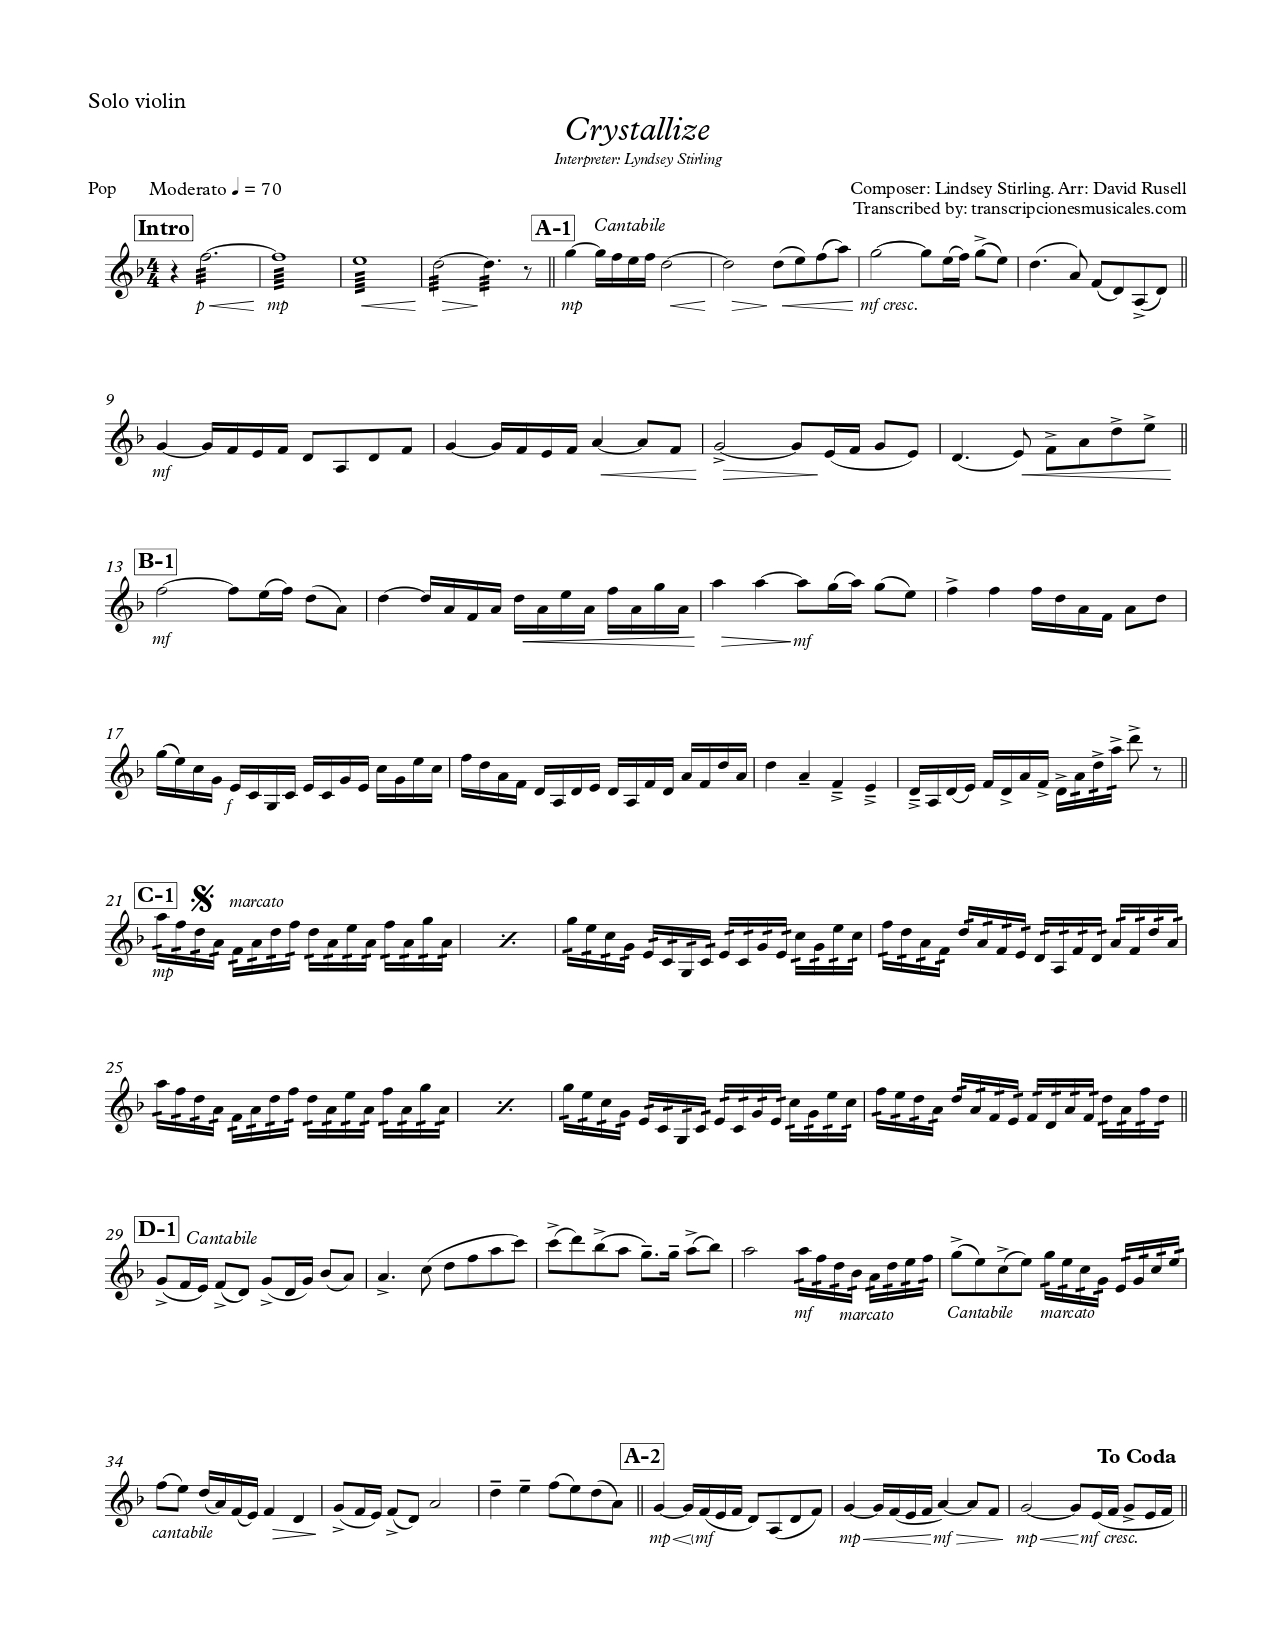 Crystallize - solo violin page 1